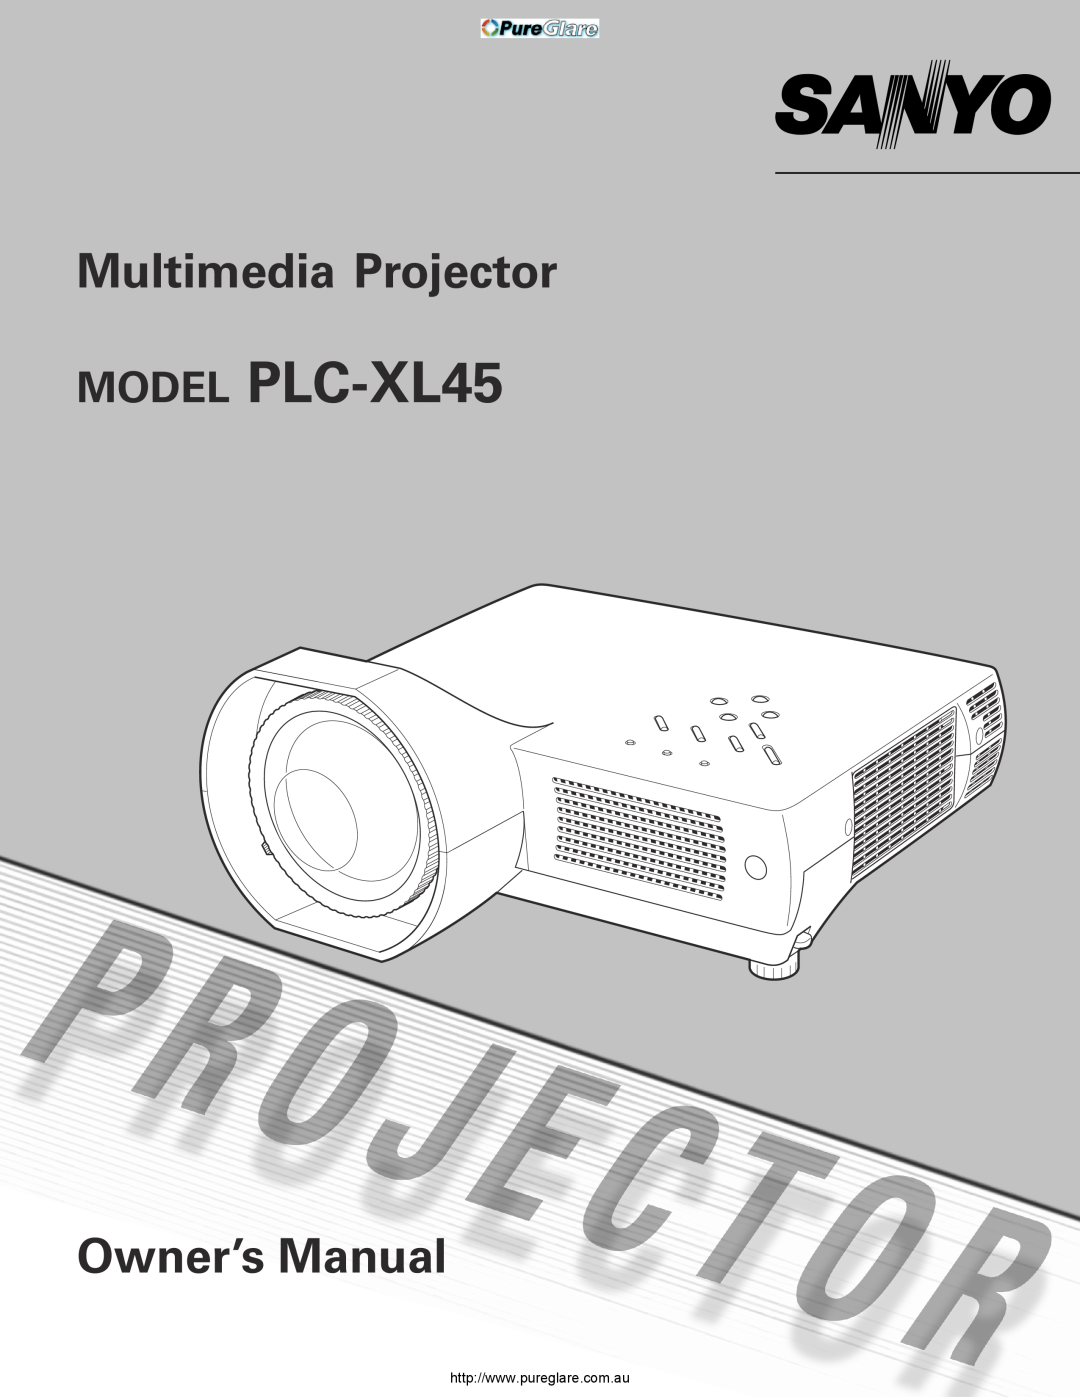 Sanyo owner manual MODEL PLC-XL45, Multimedia Projector 